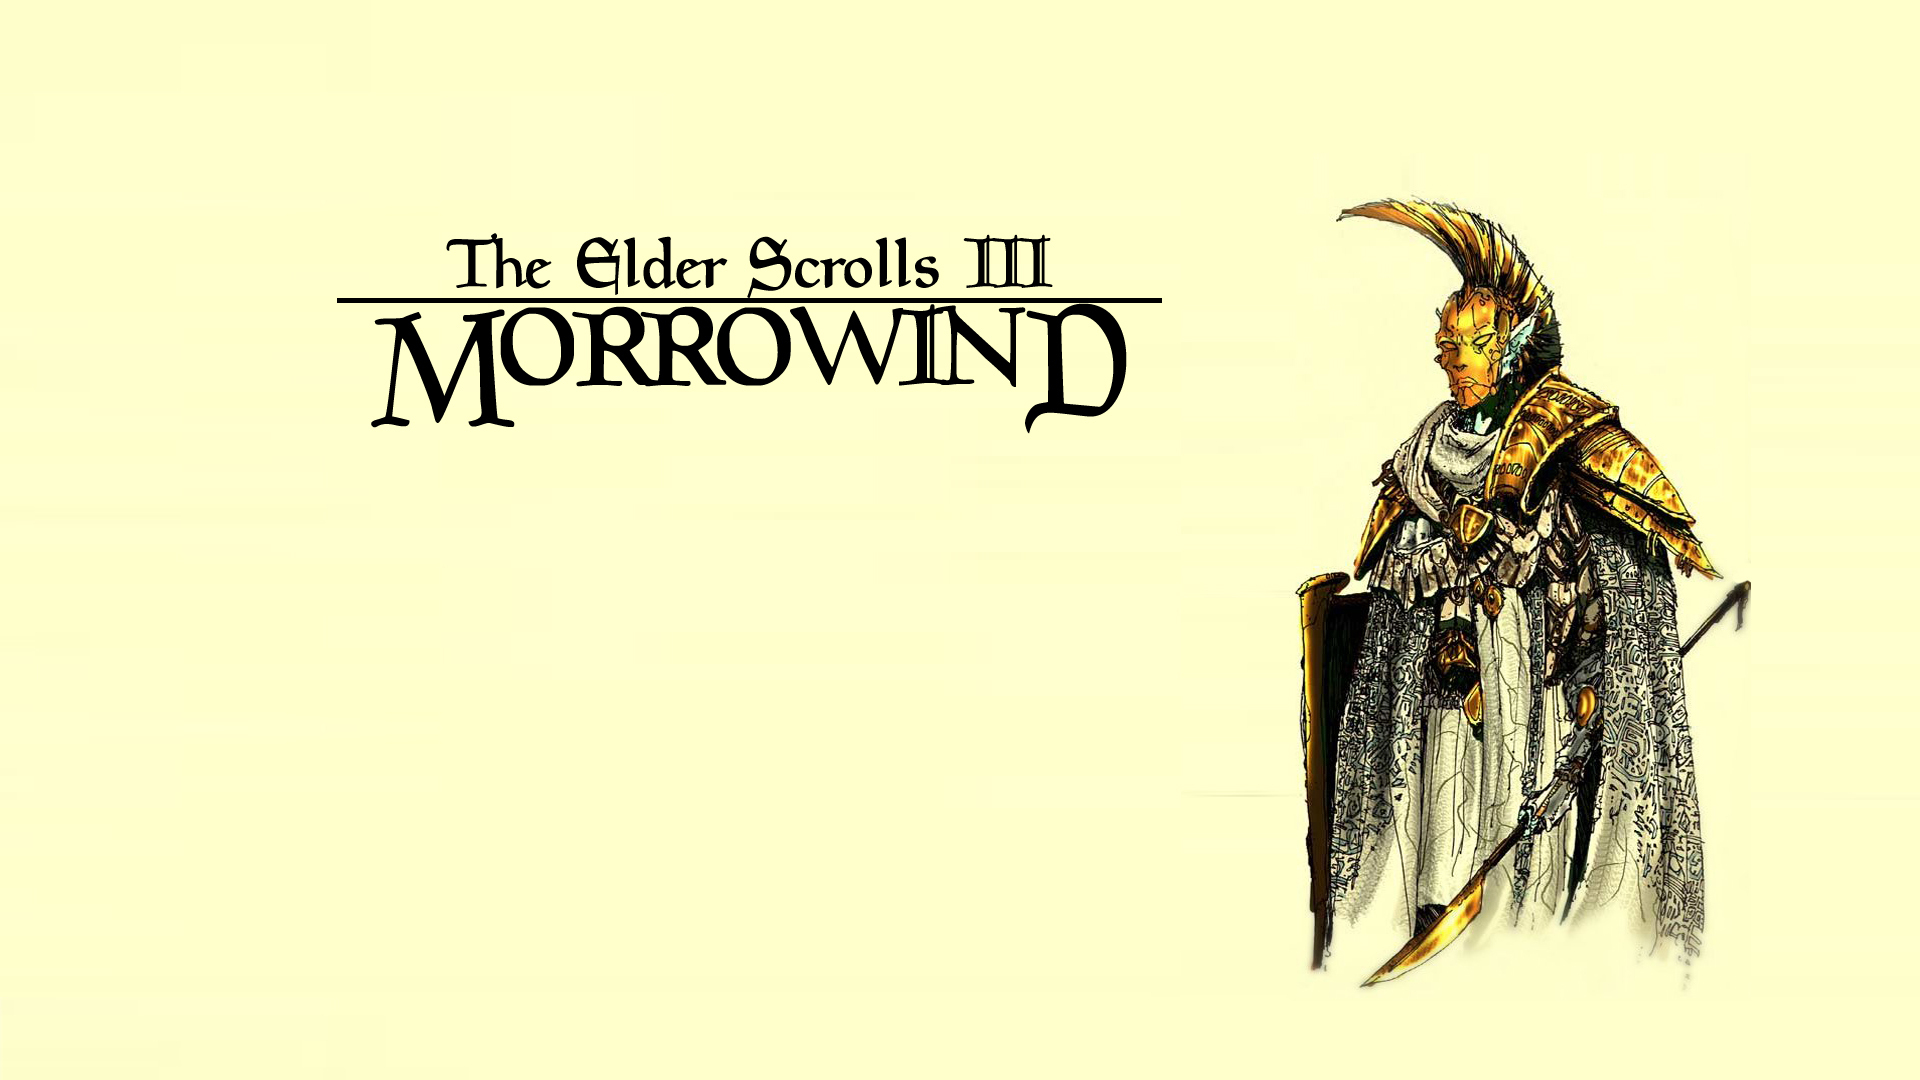 Wallpaper The Elder Scrolls III: Morrowind "Escort"